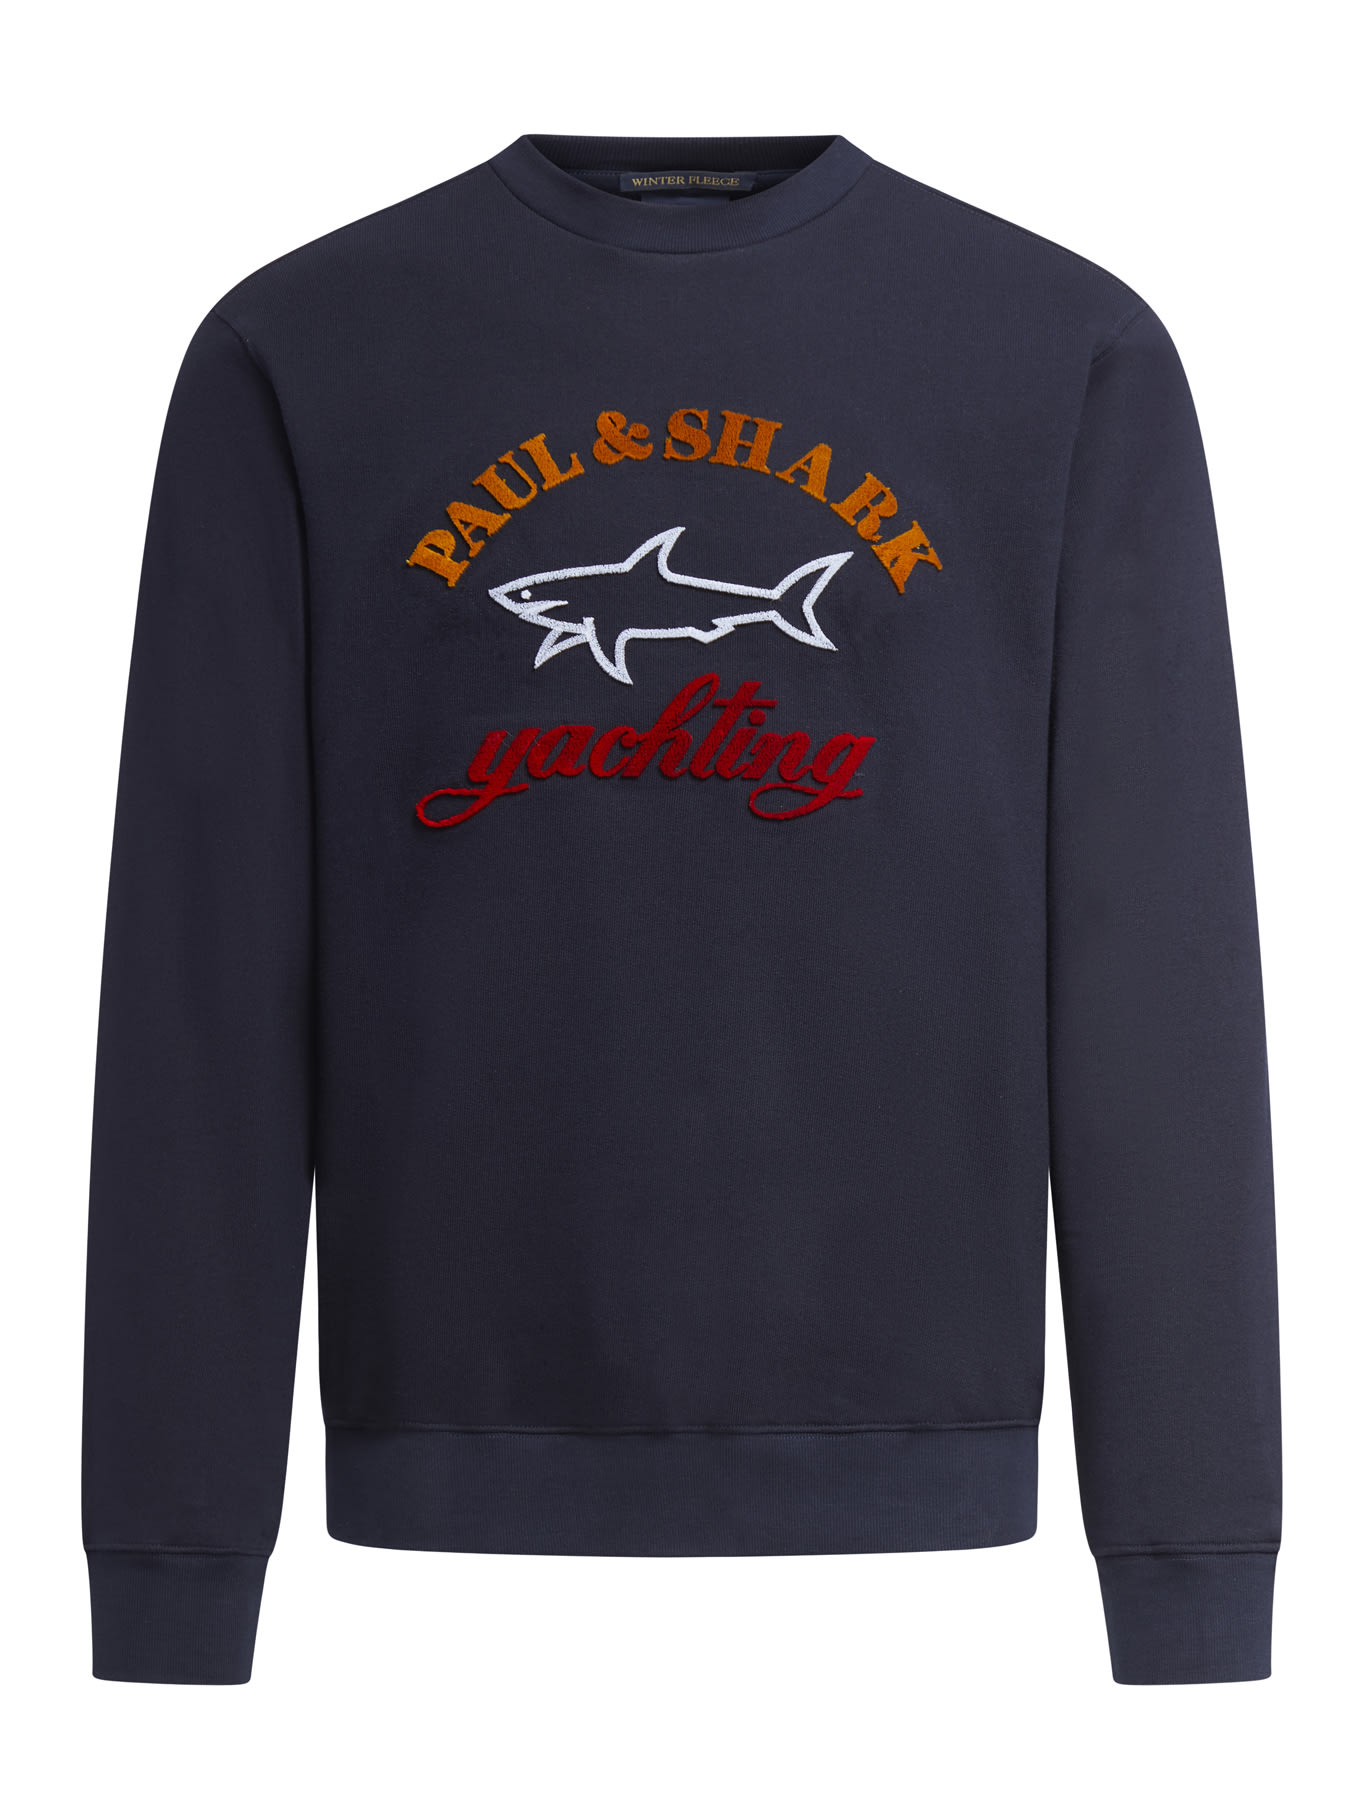 Paul&amp;shark Sweatshirt In Navy Blue